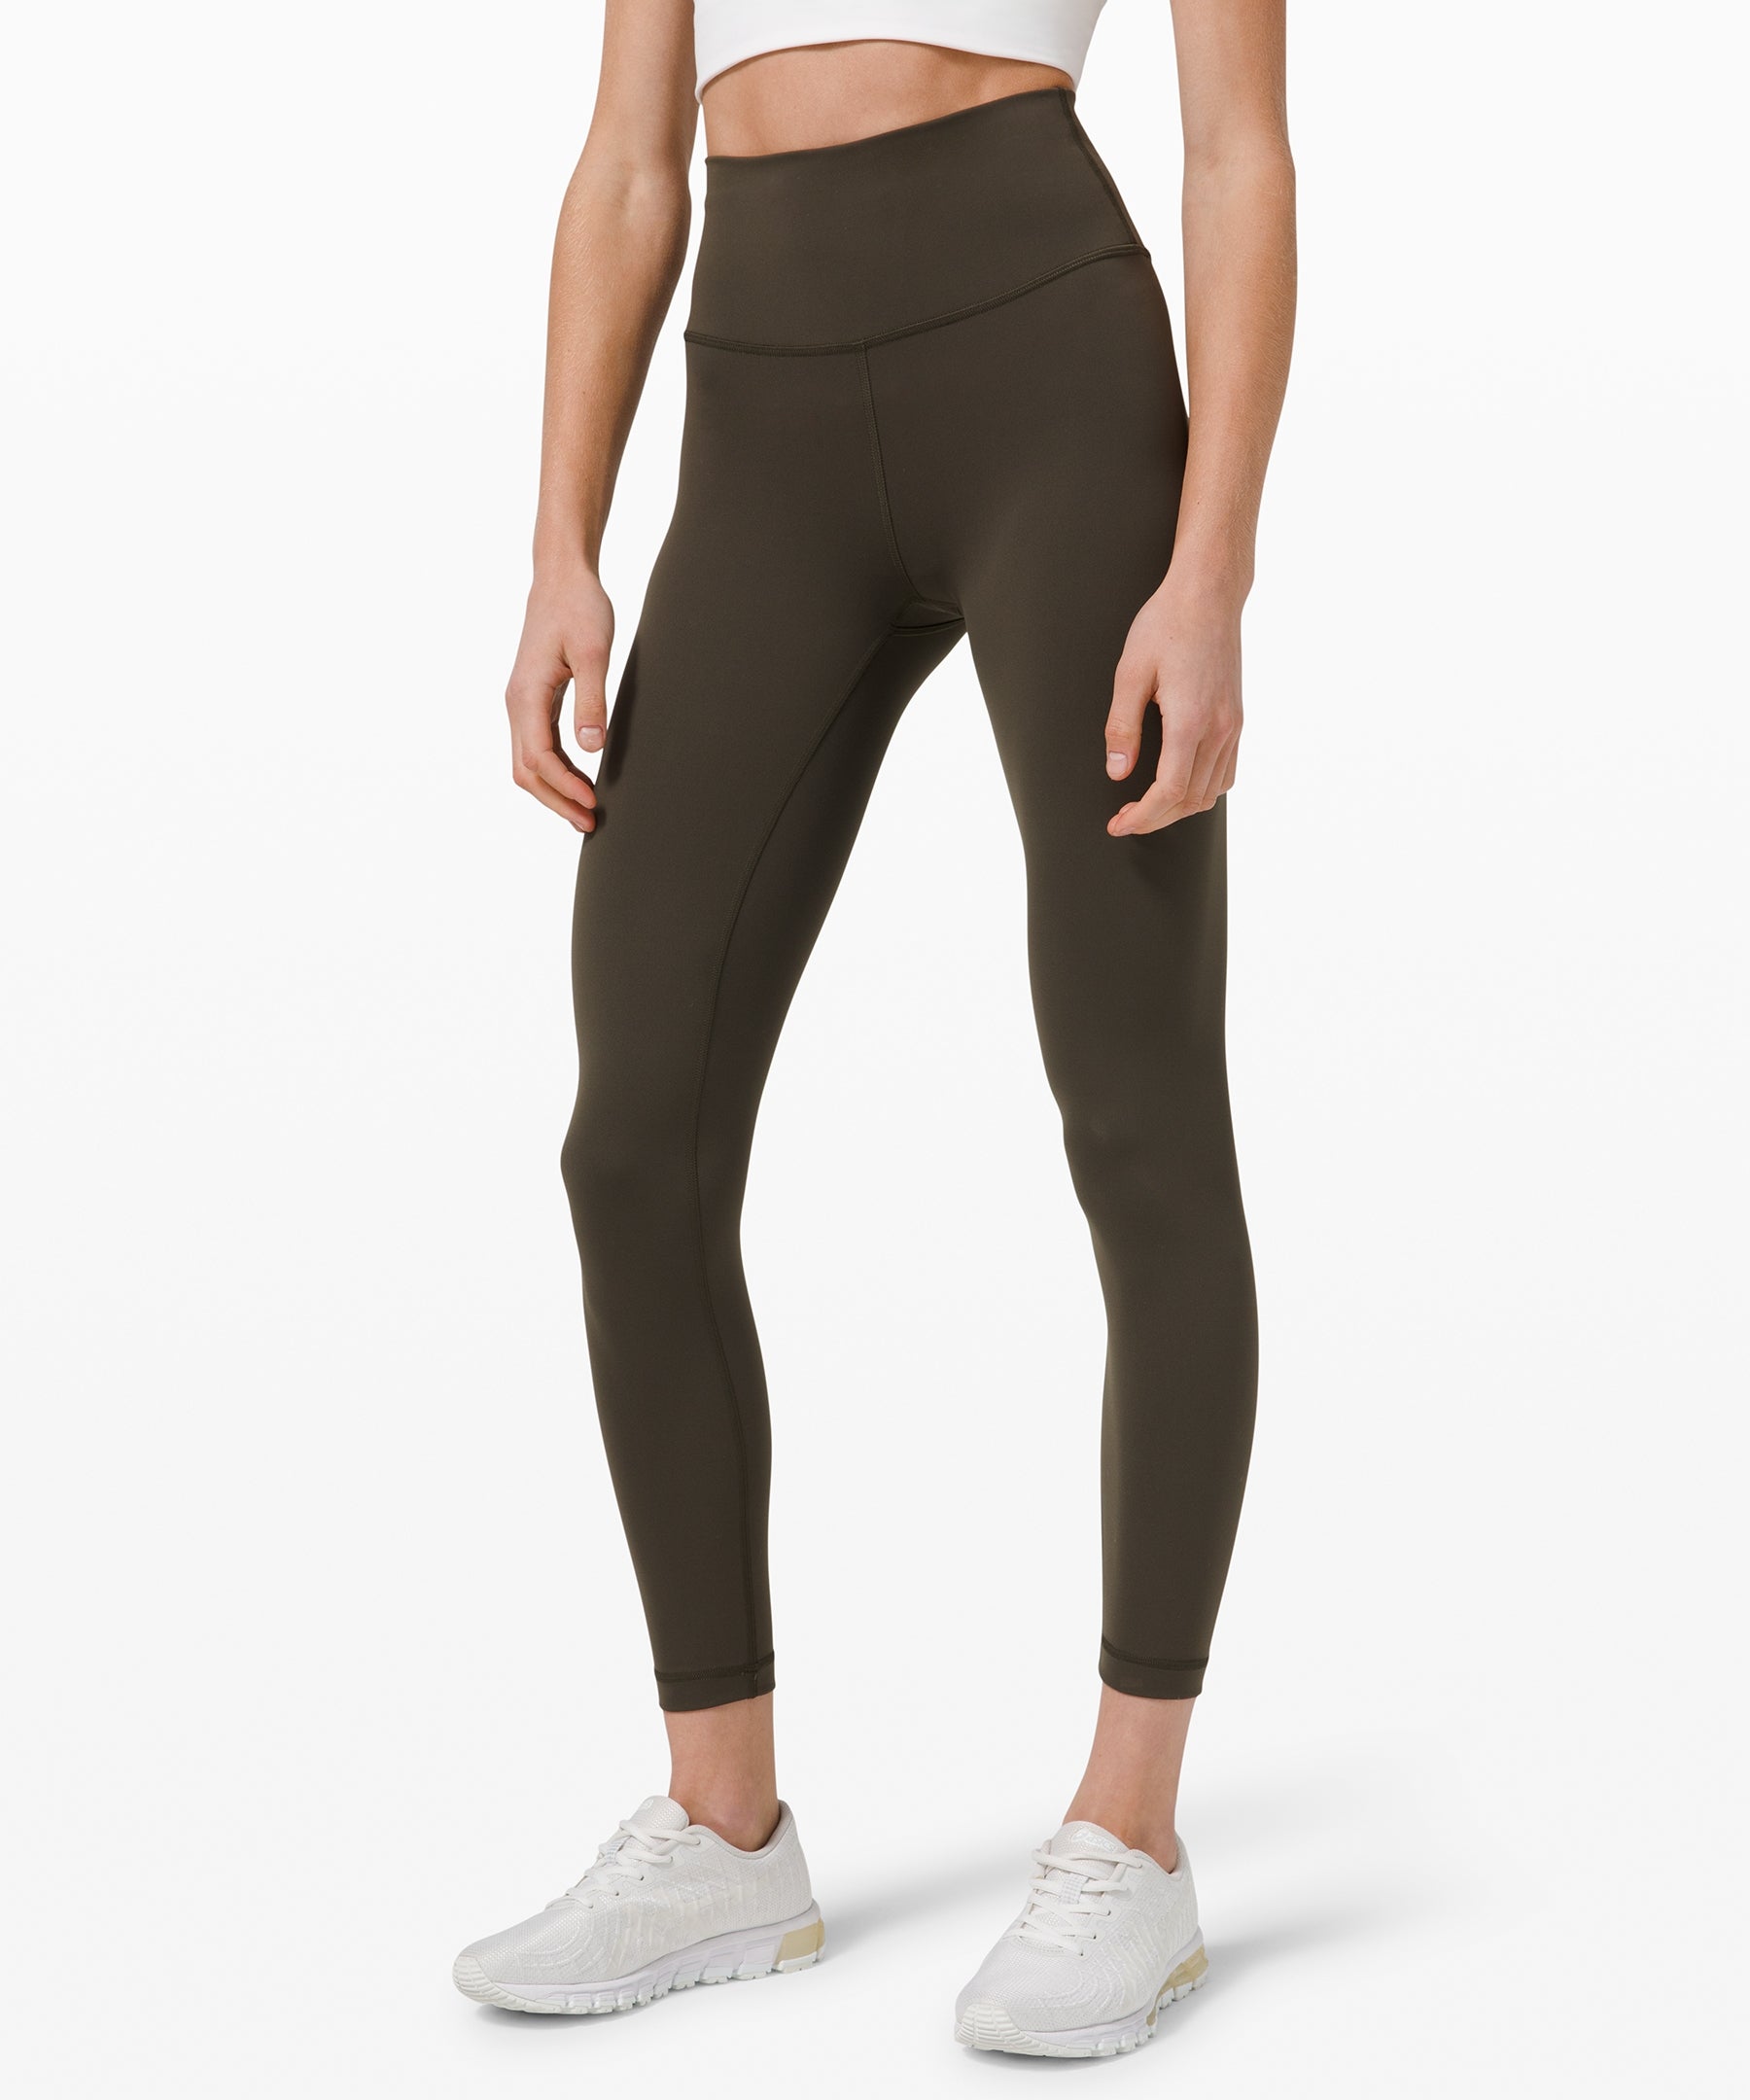 lululemon leggings review plus size